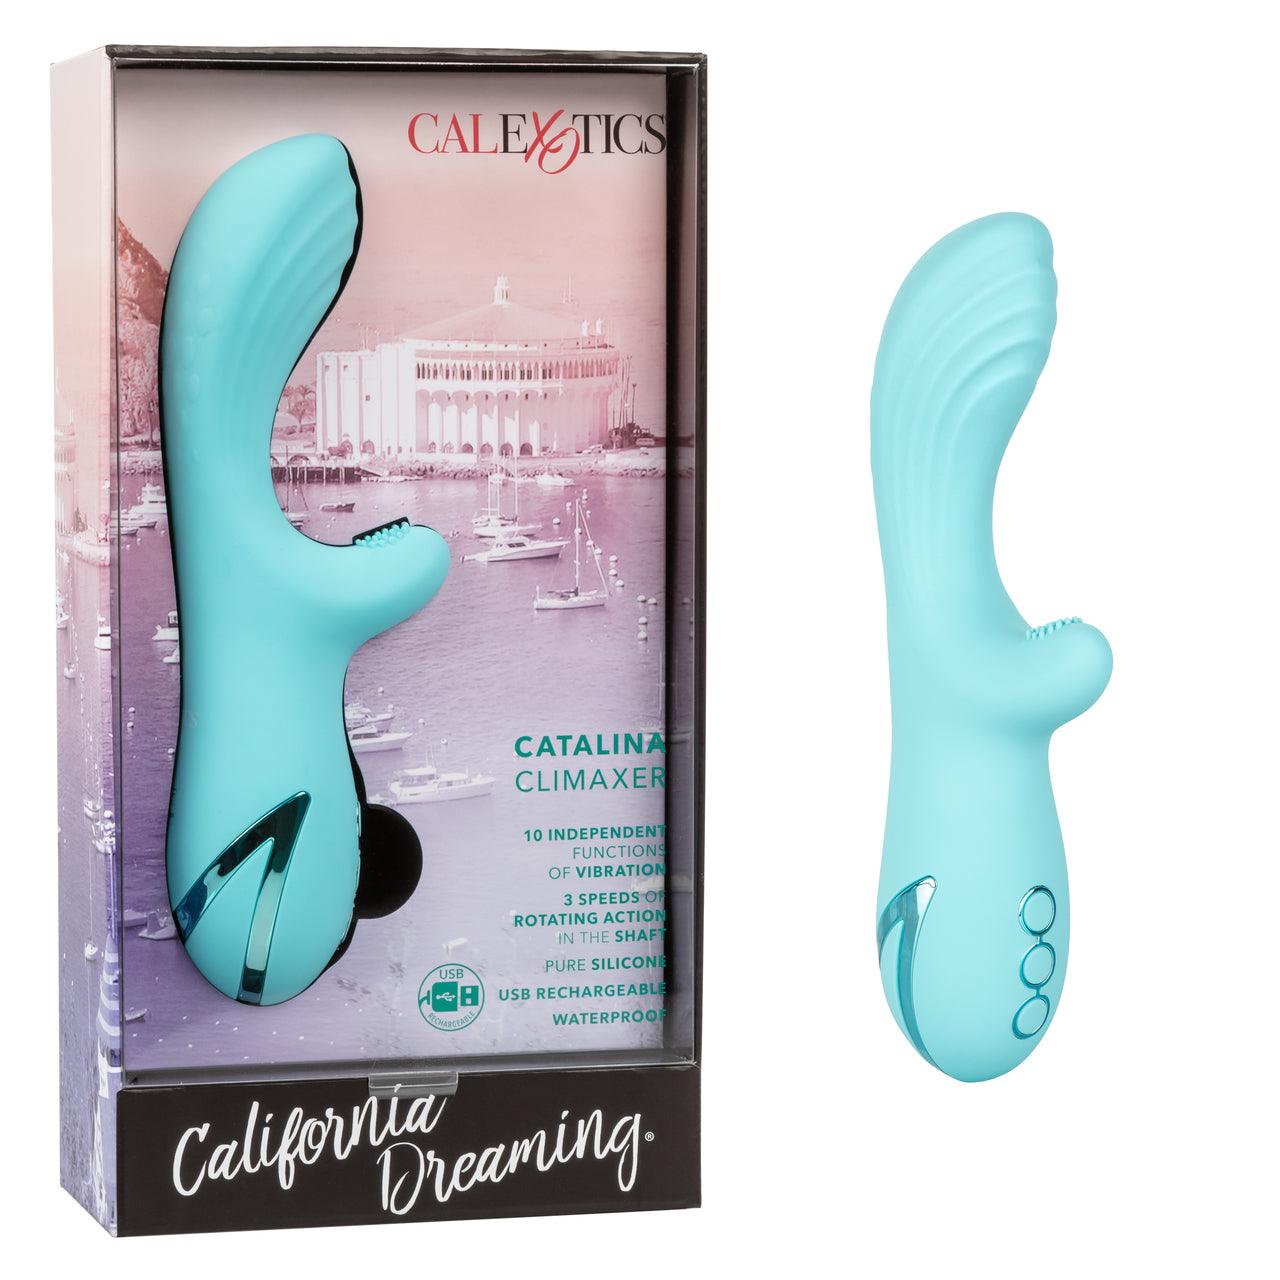 Calexotics California Dreamin Catalina Climaxer - Buy At Luxury Toy X - Free 3-Day Shipping